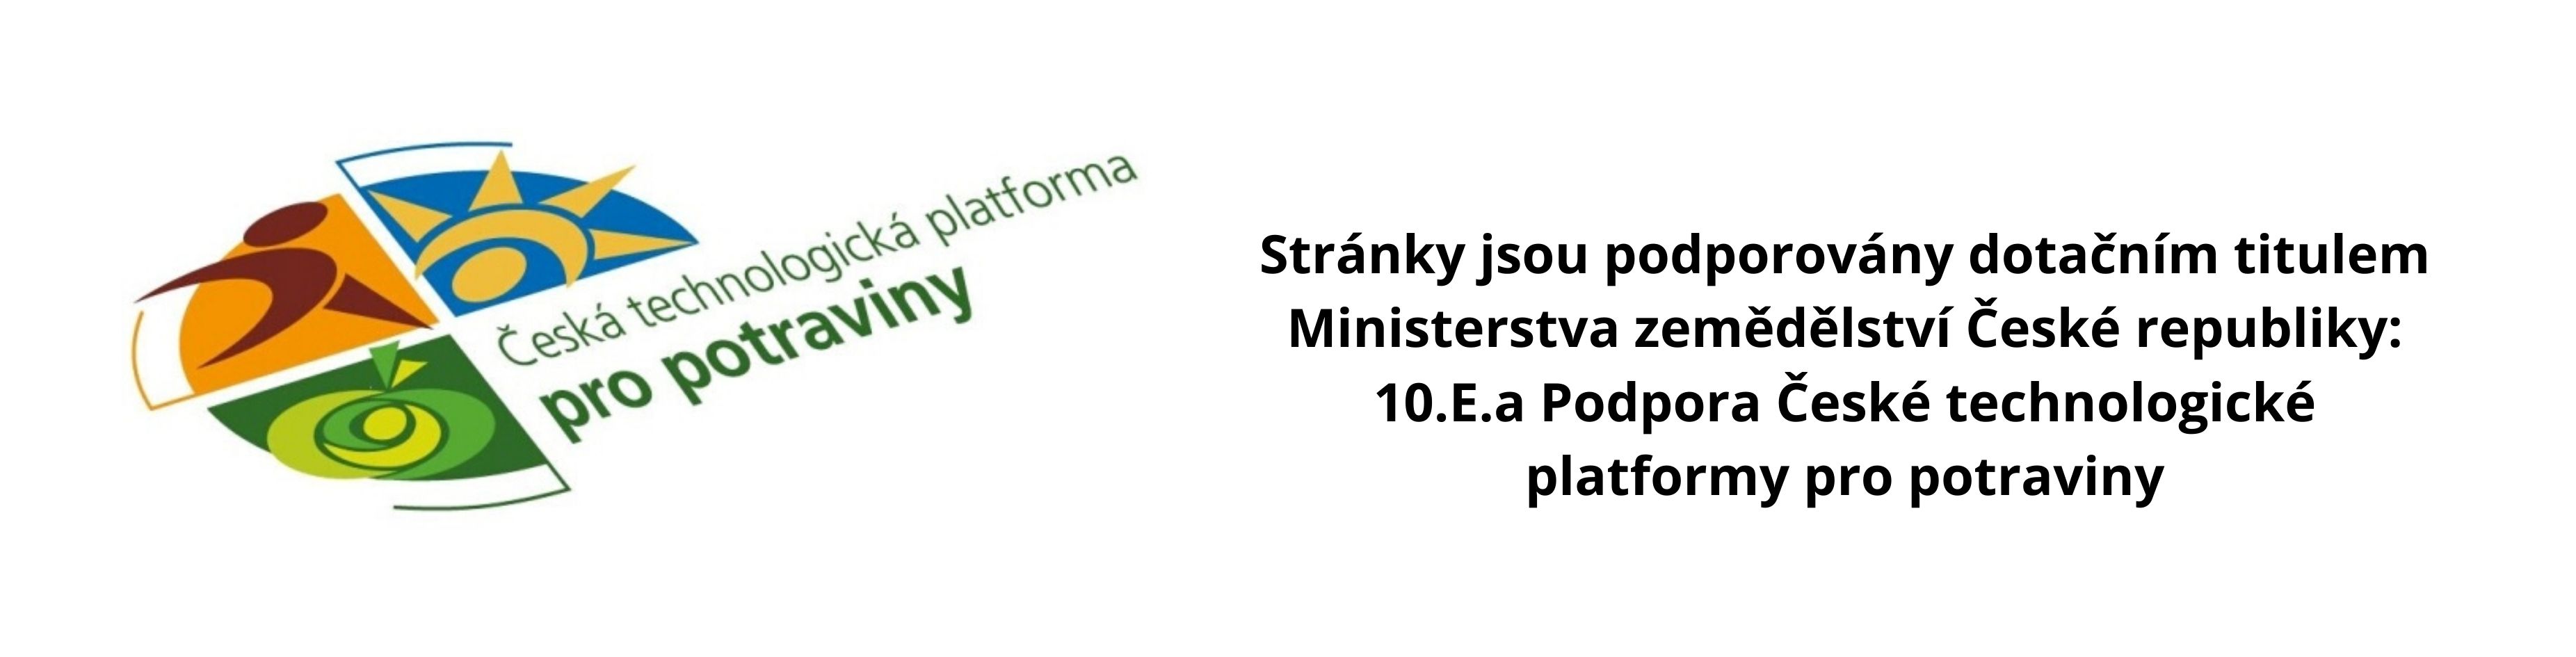 ČTPP banner.jpg